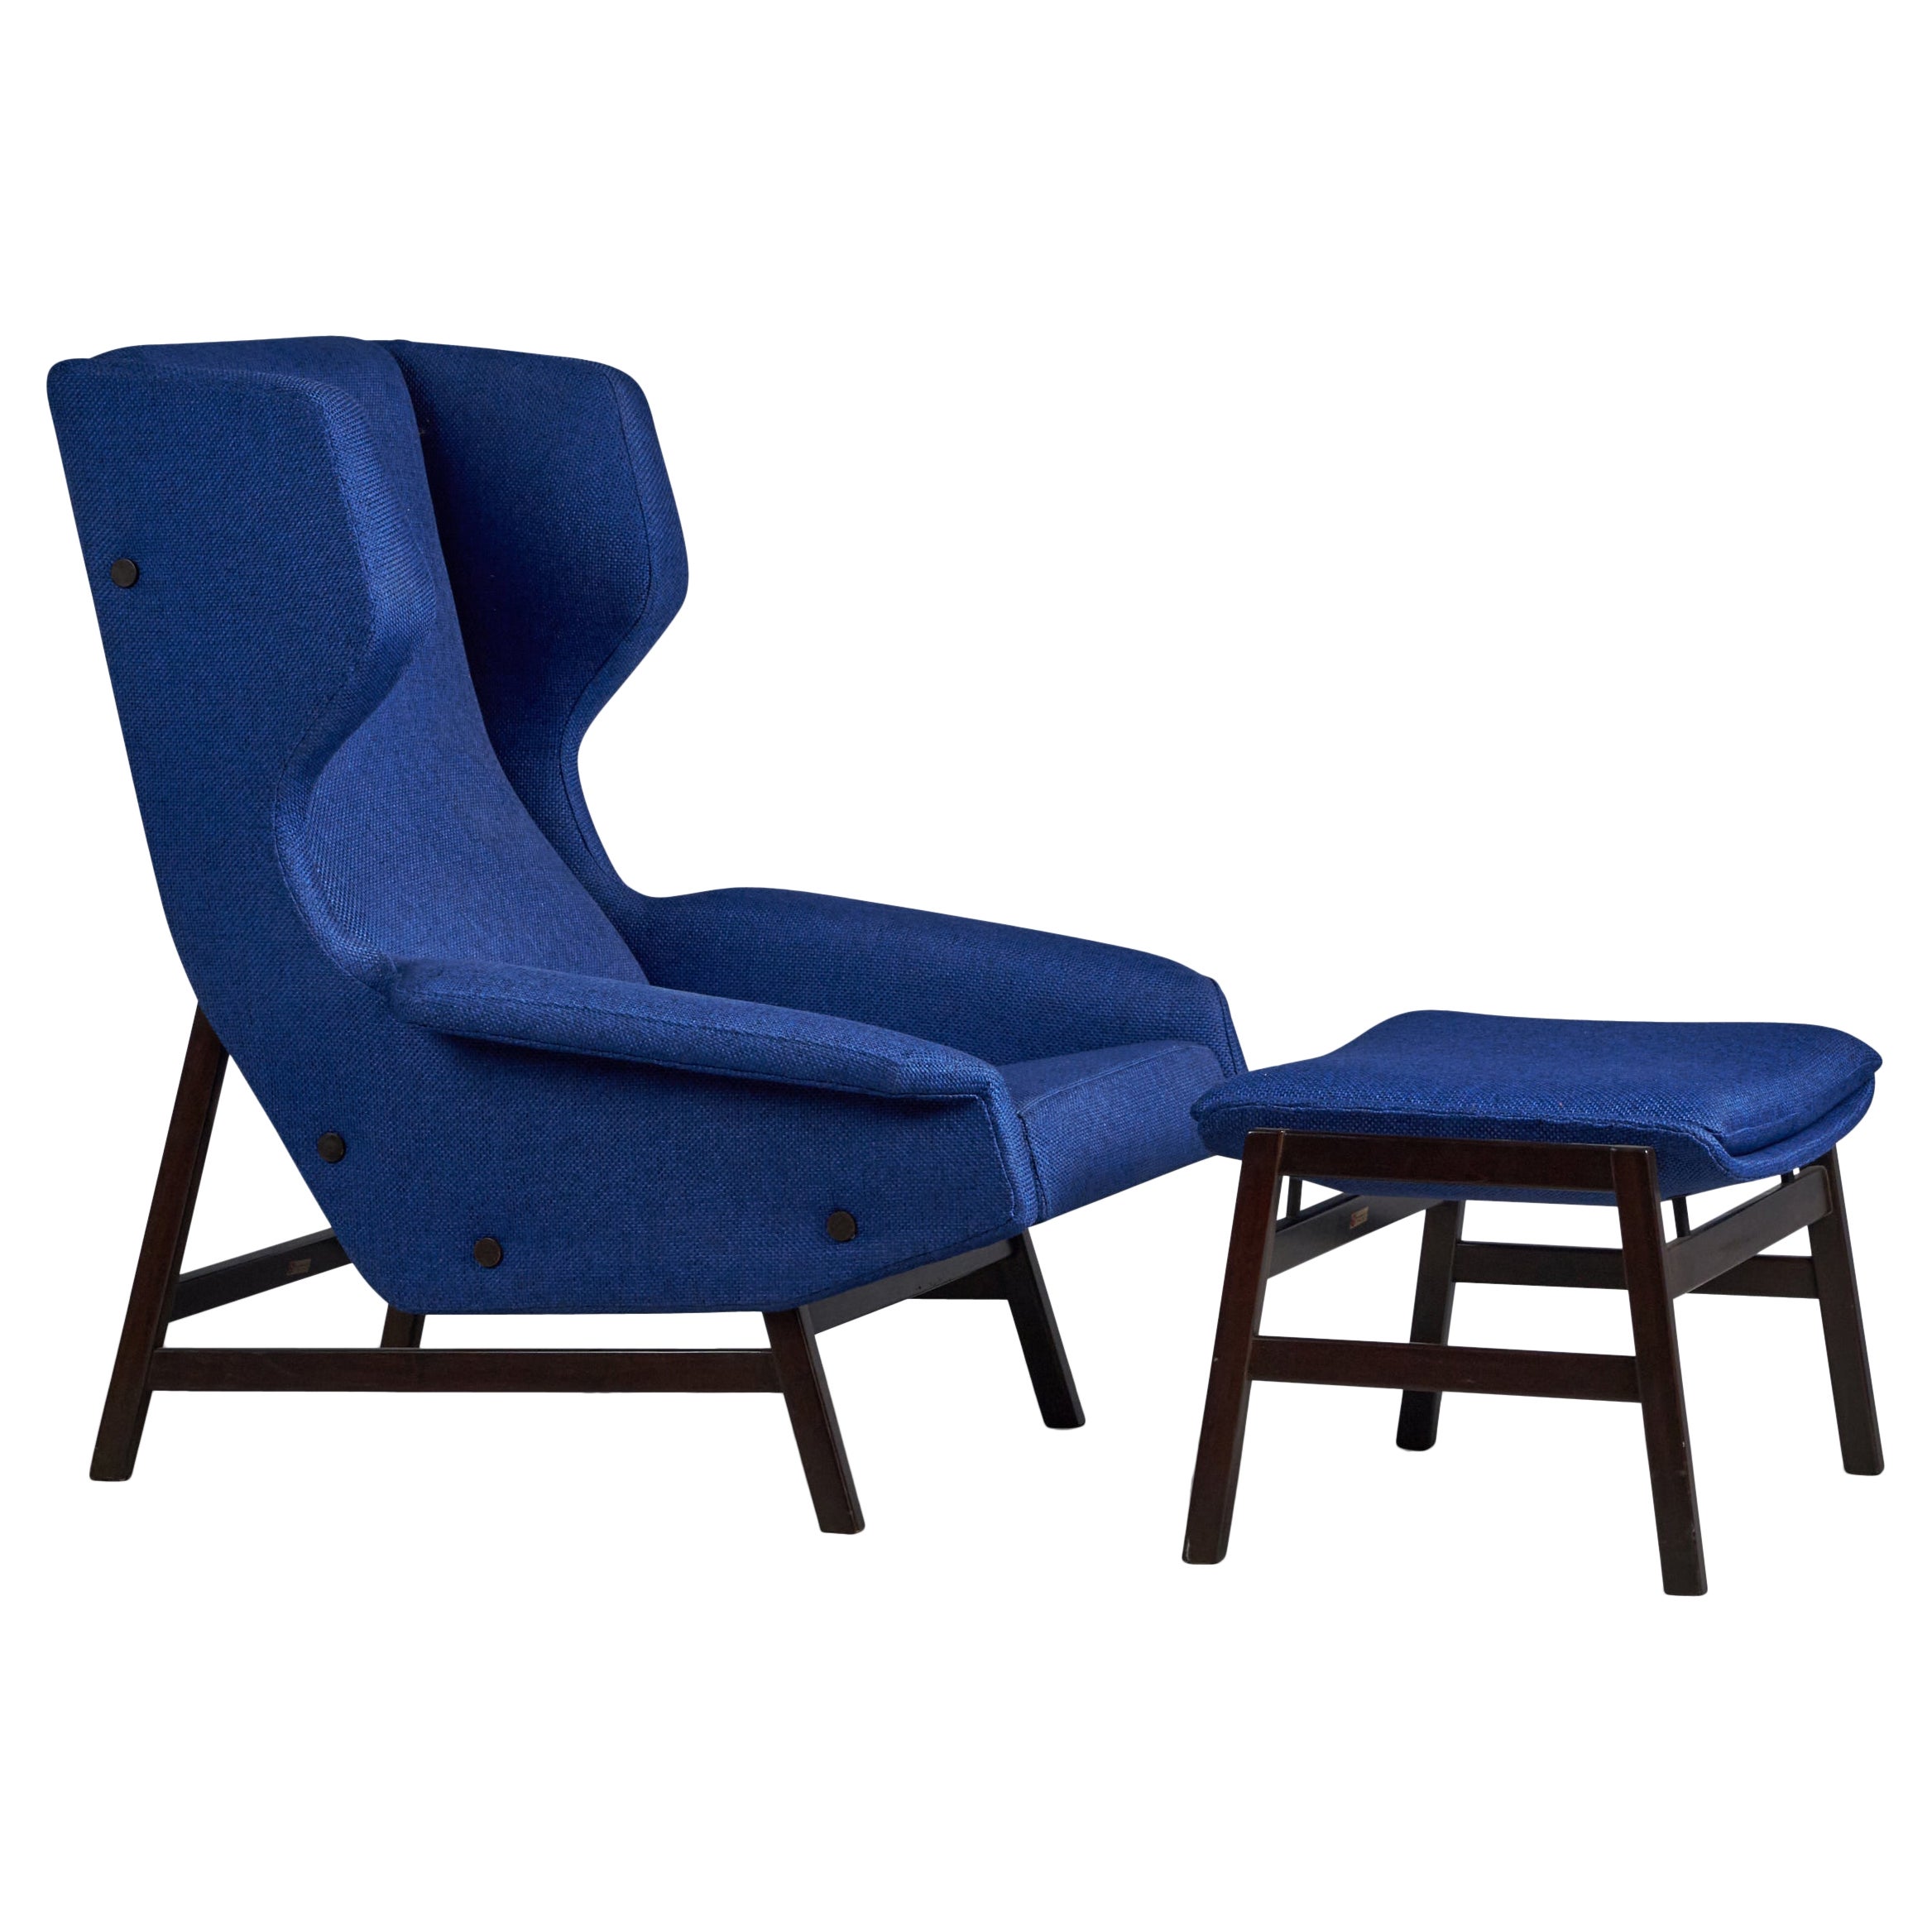 Gianfranco Frattini, Lounge Chair & Ottoman, Fabric, Wood, Italy, 1950s